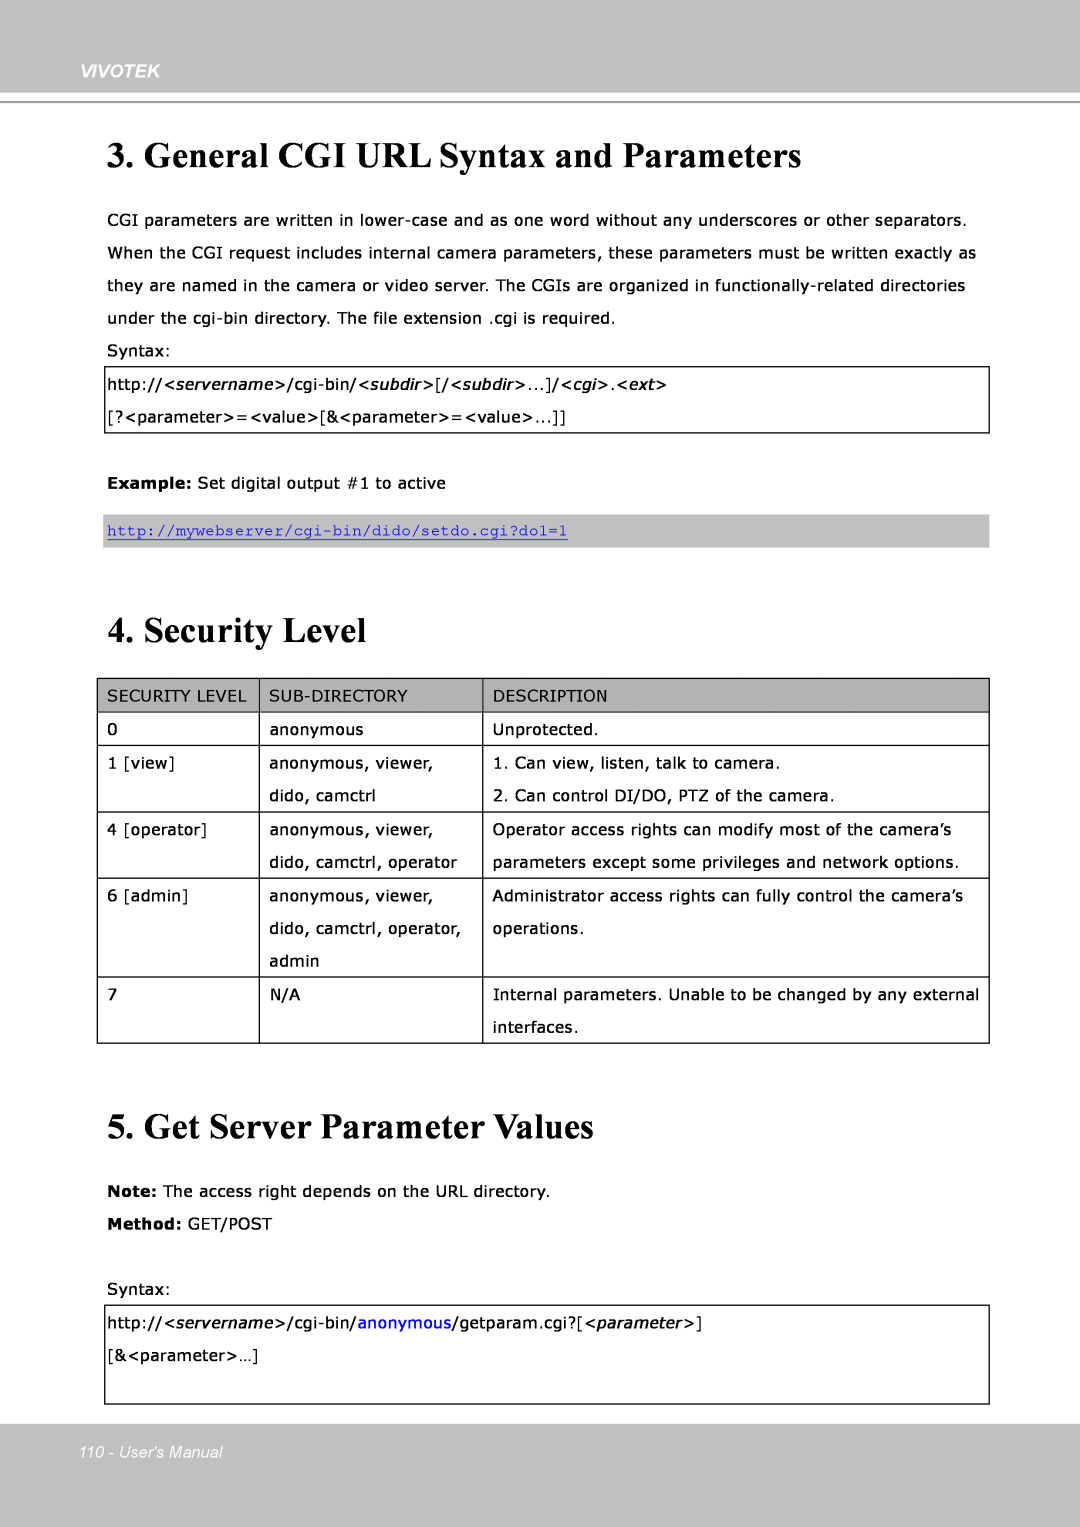 Vivotek IP8151 General CGI URL Syntax and Parameters, Security Level, Get Server Parameter Values, Vivotek, Users Manual 